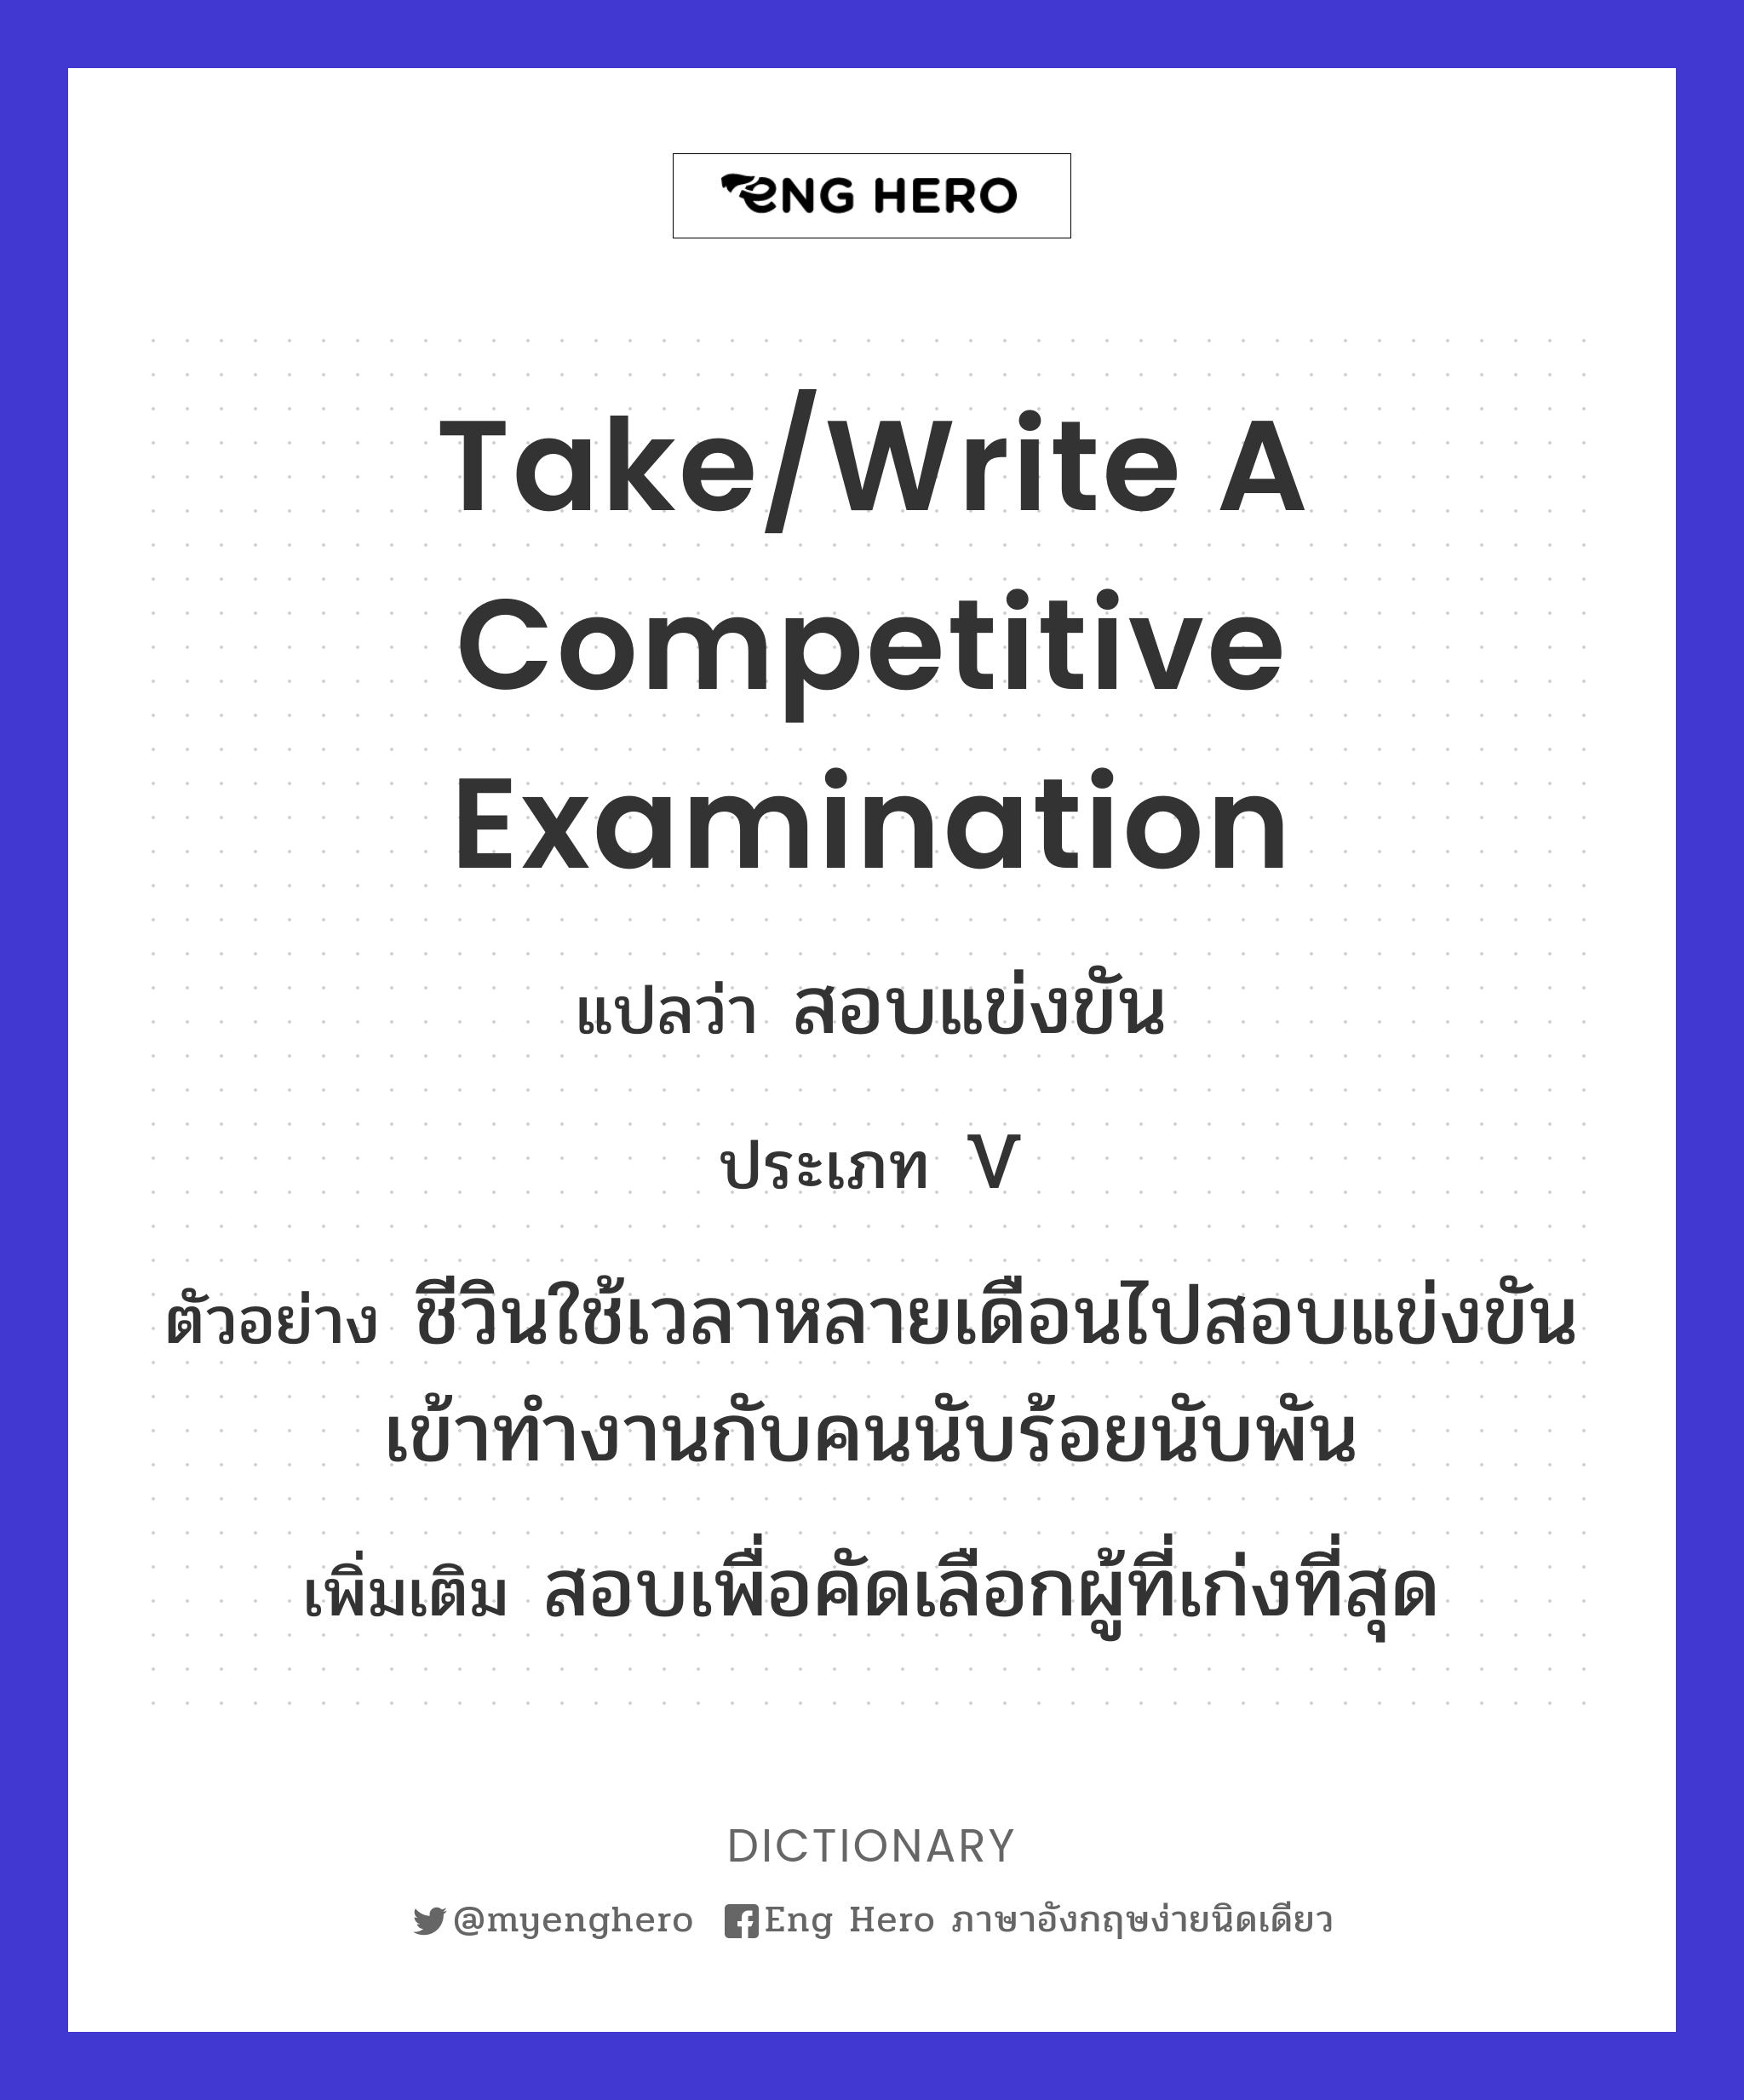 take/write a competitive examination